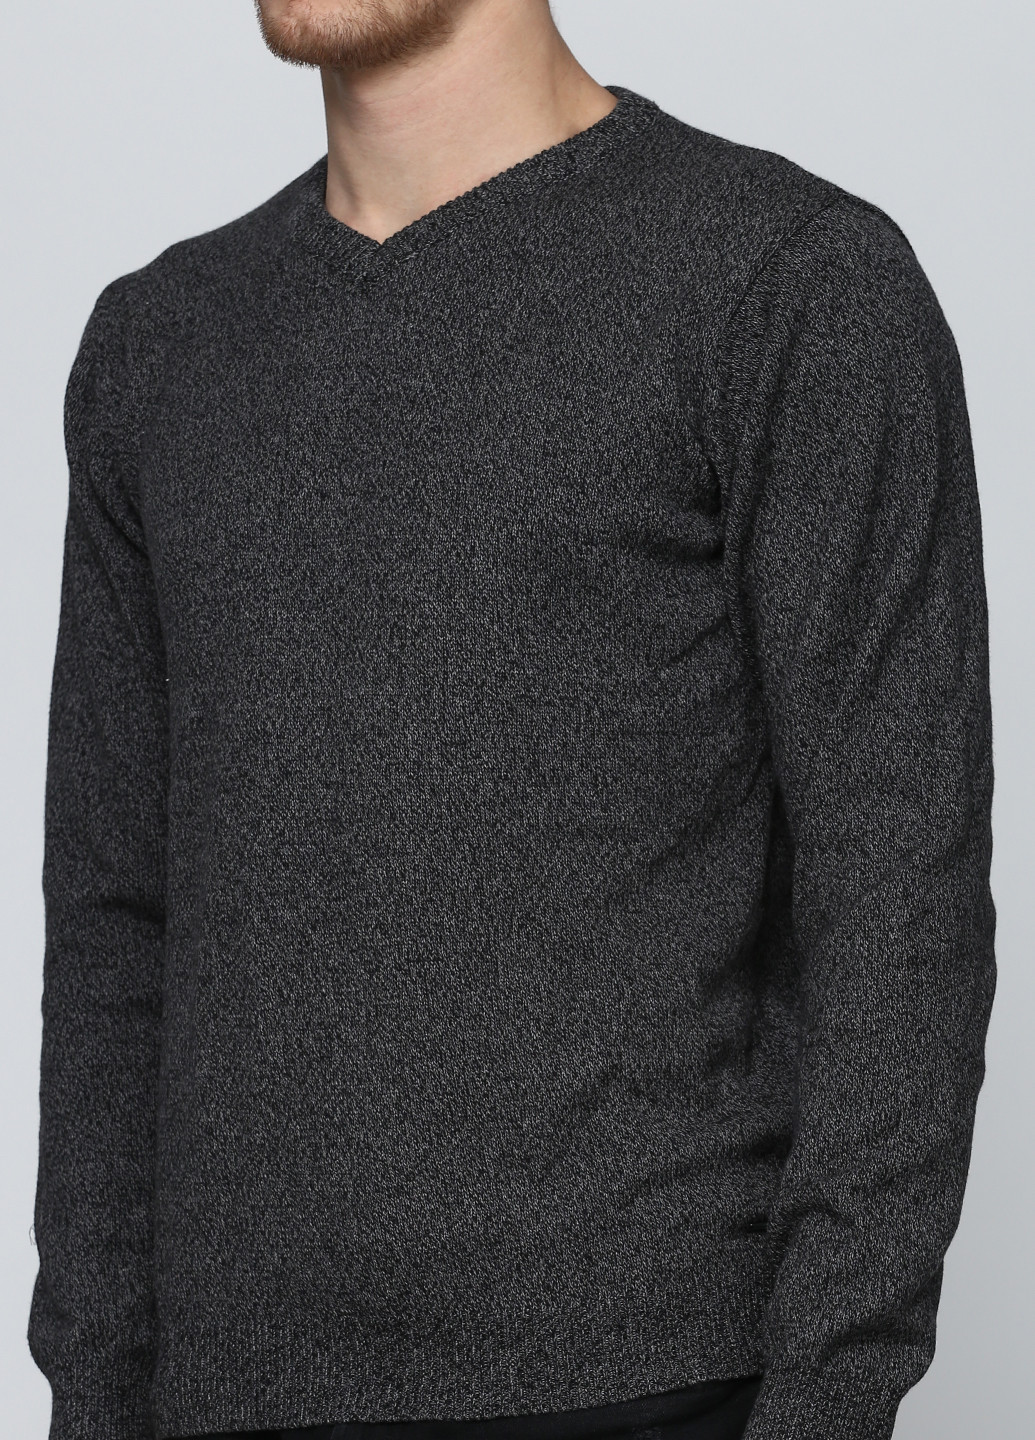 Темно-серый демисезонный пуловер пуловер Fresh